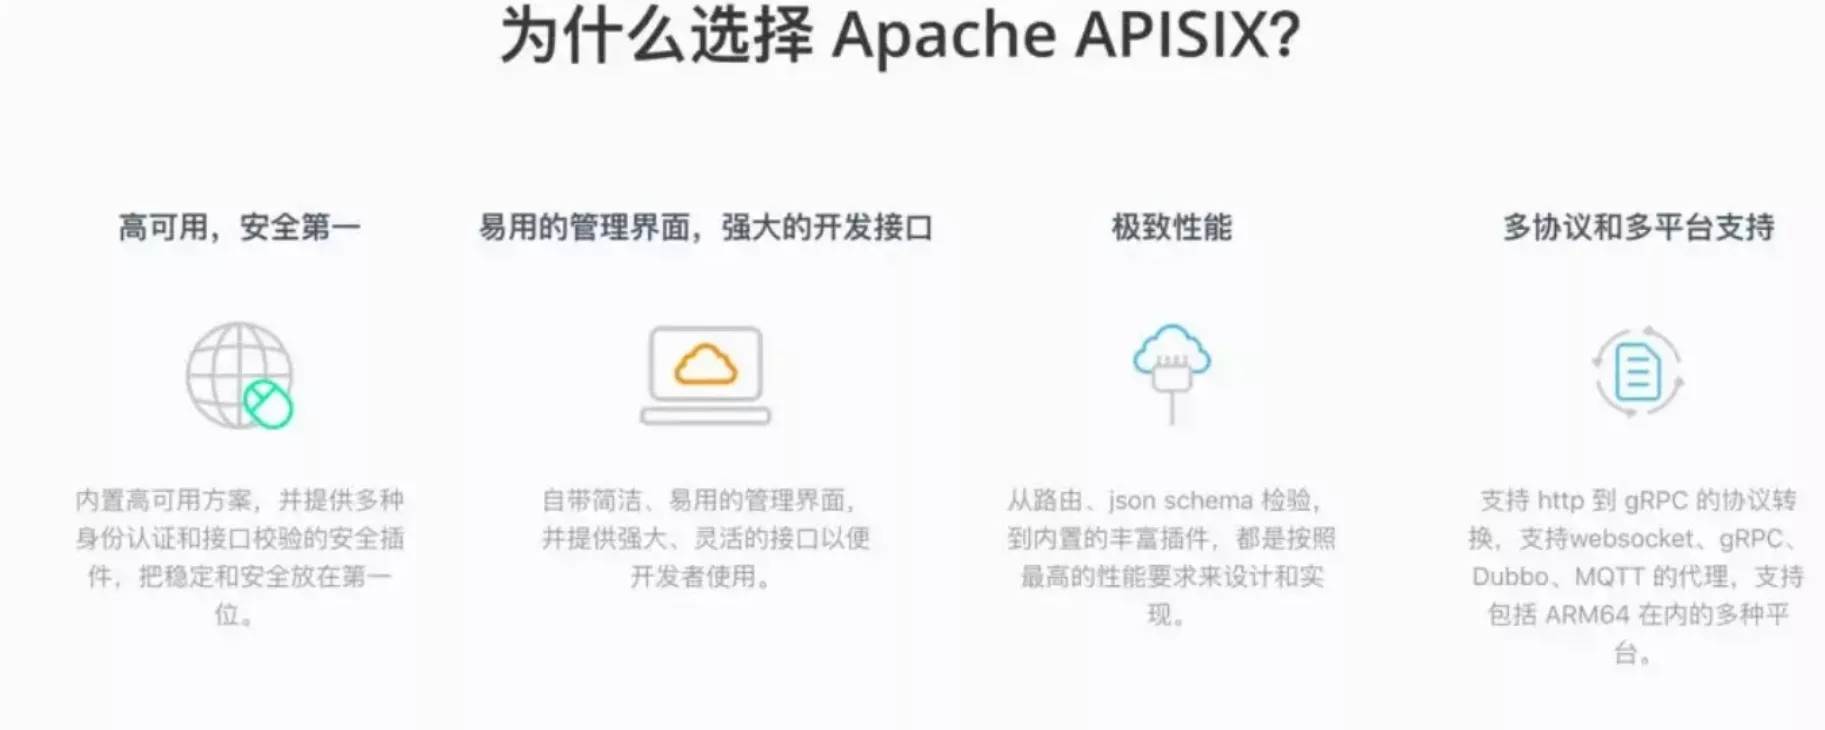 Apache APISIX 技术亮点